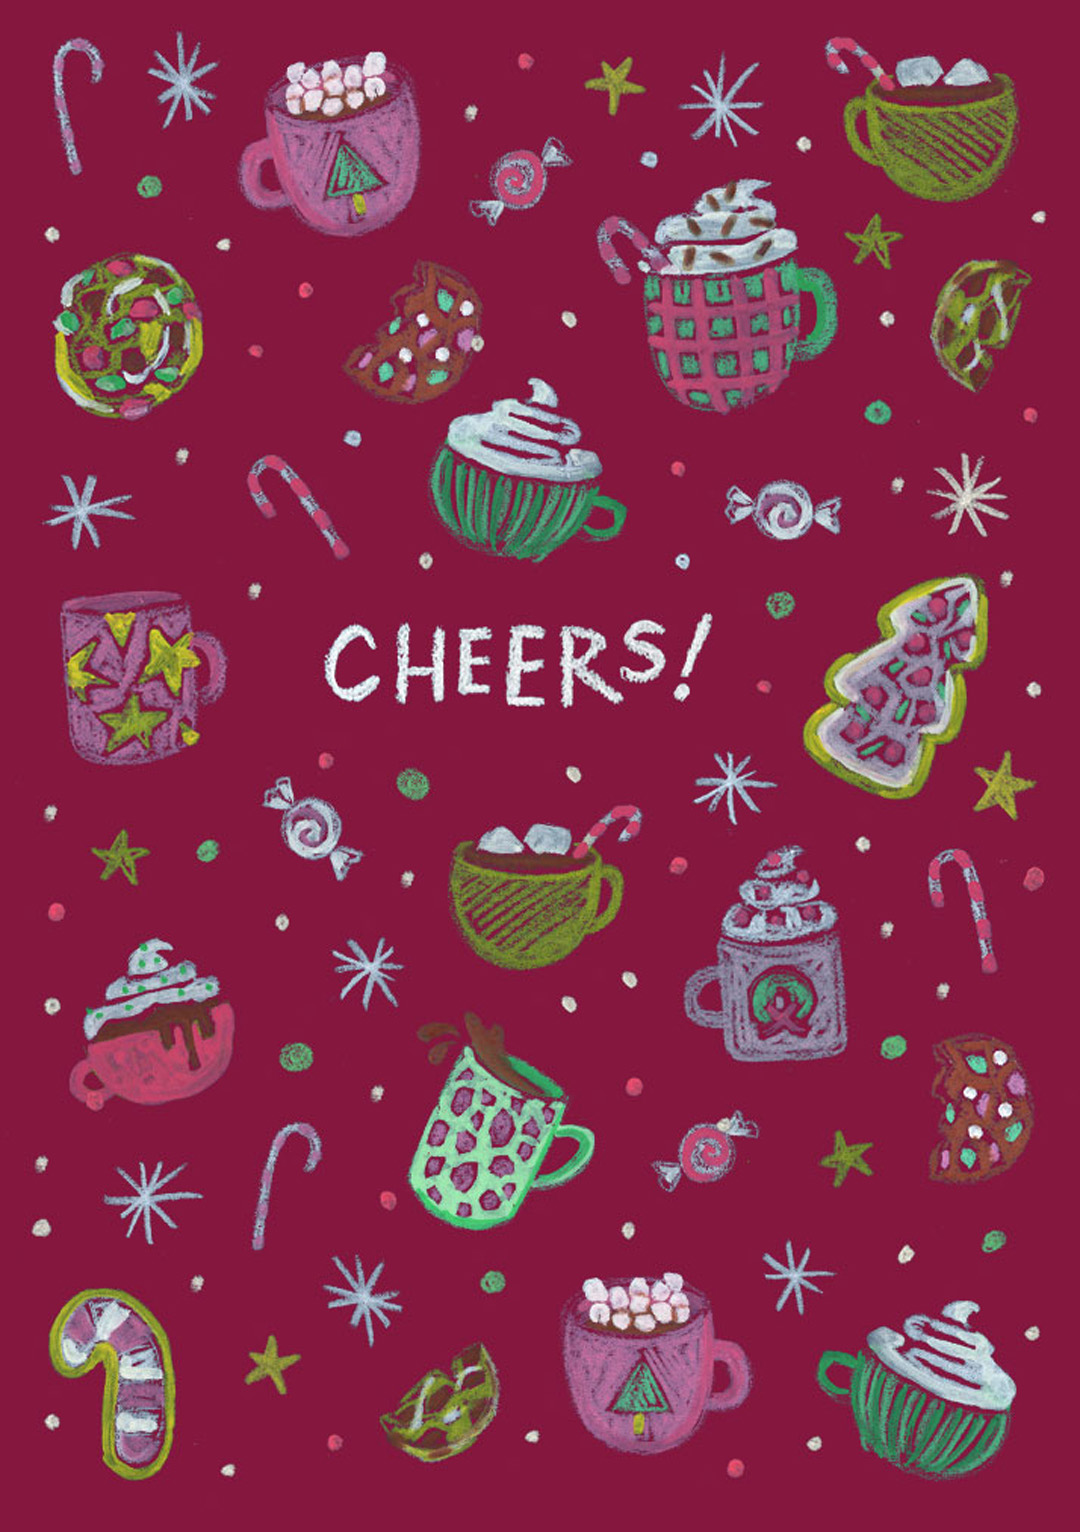 Cheers hot chocolate greetings card